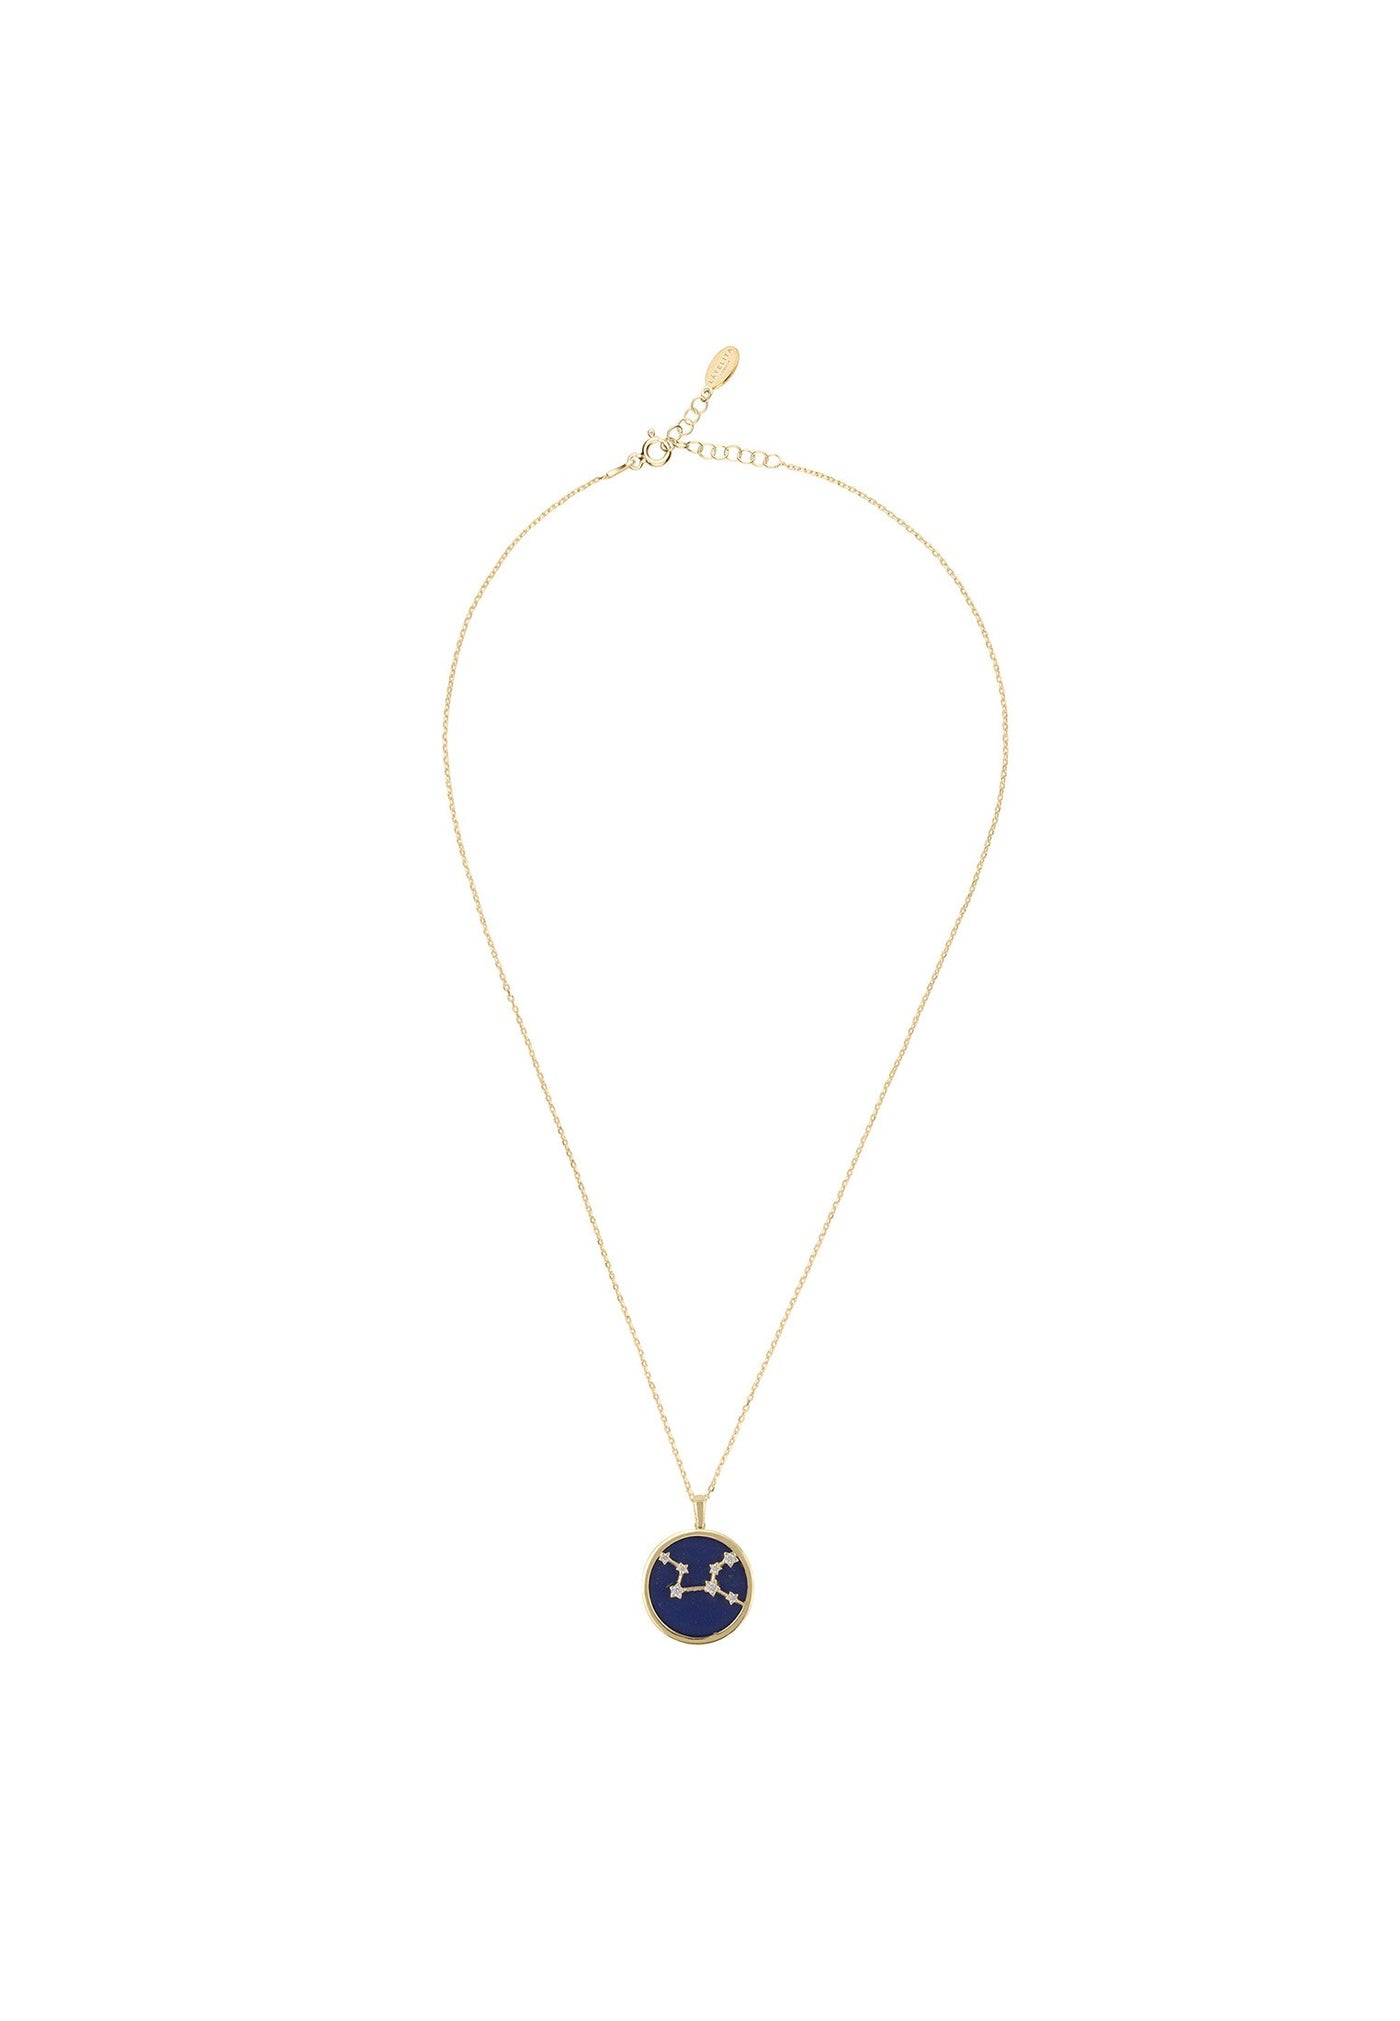 Virgo - necklace - 22 carat gold plated - lapis lazuli with white zirconia